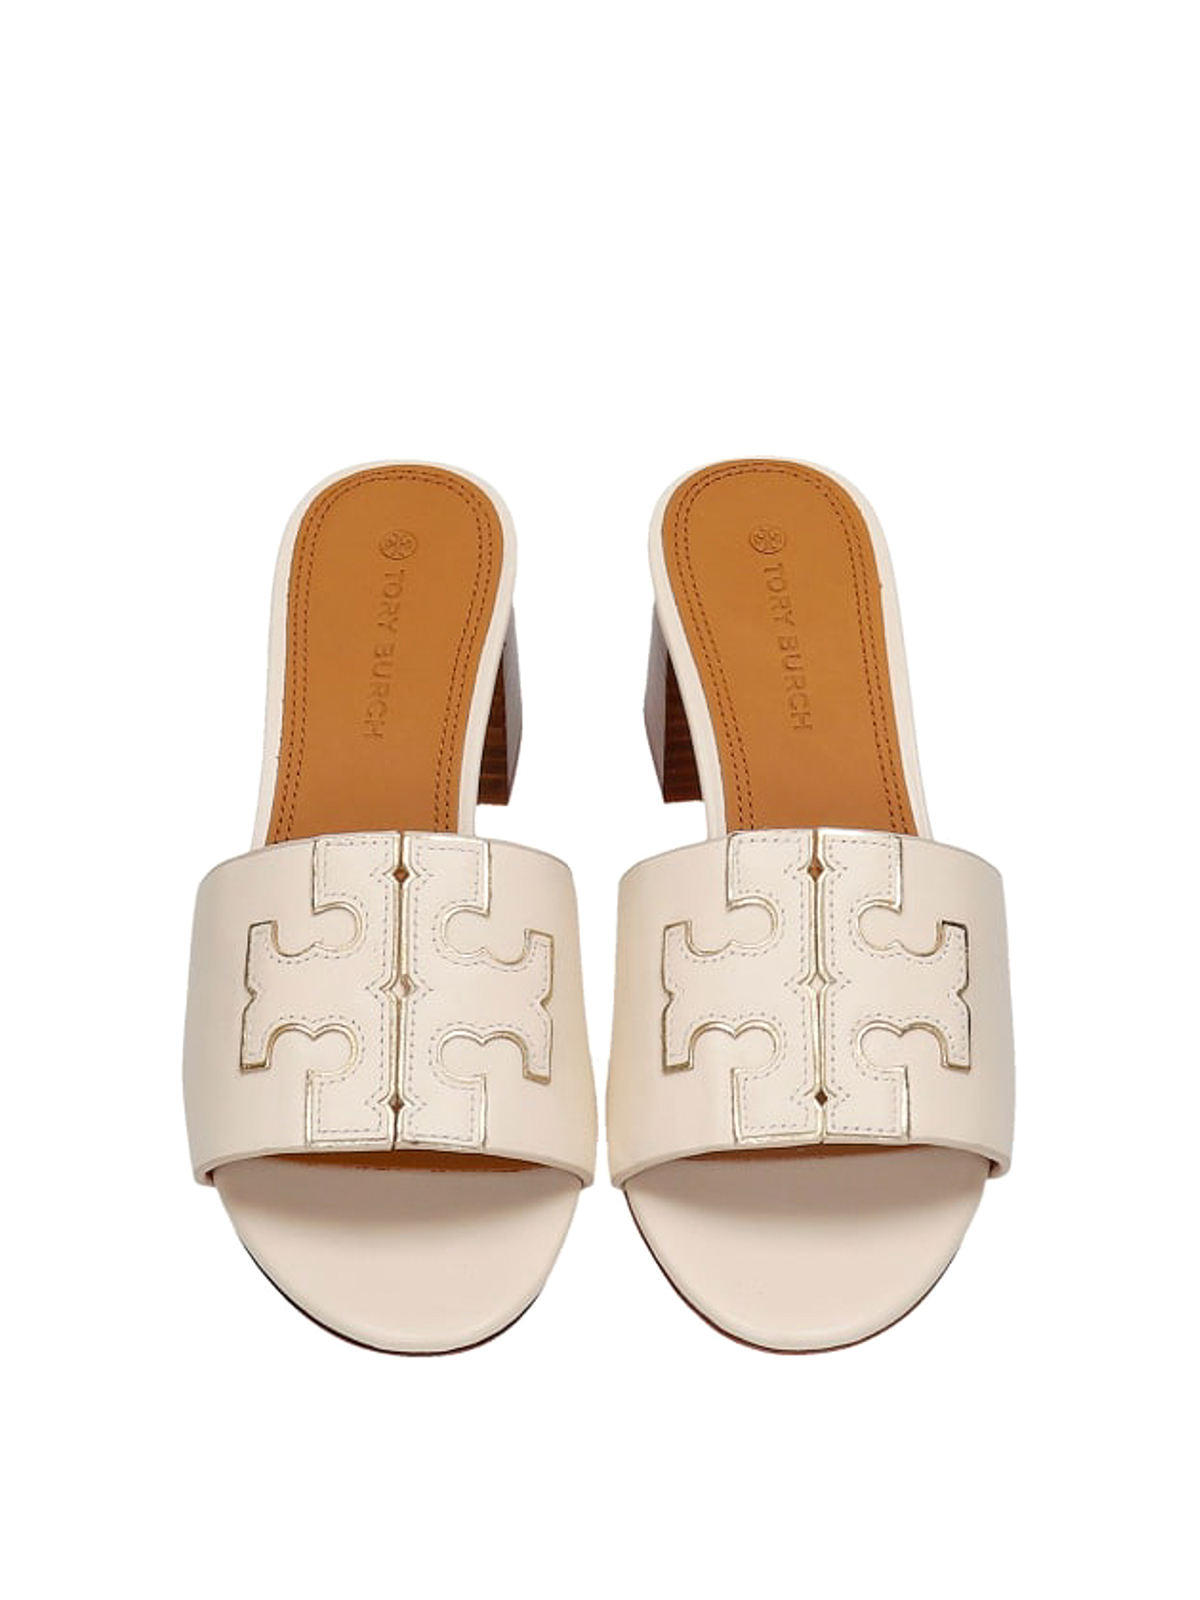 Sandals Tory Burch - Ines 55 sandals - 66261101 | Shop online at iKRIX